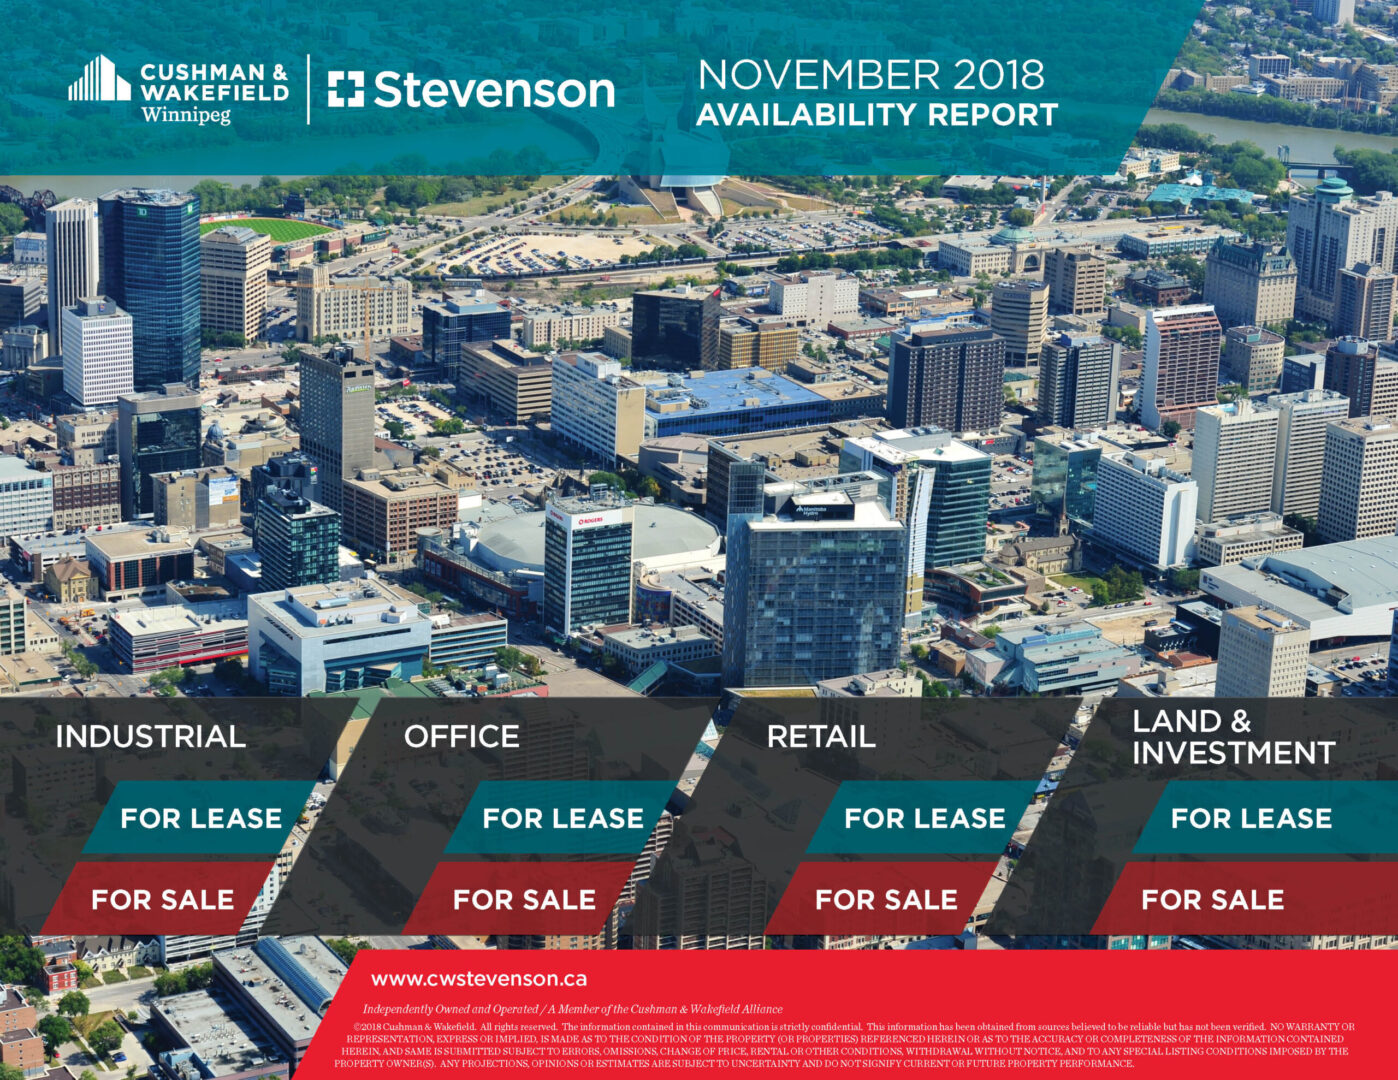 November 2018 availability report in winnipeg, cws cushman wakefield Stevenson